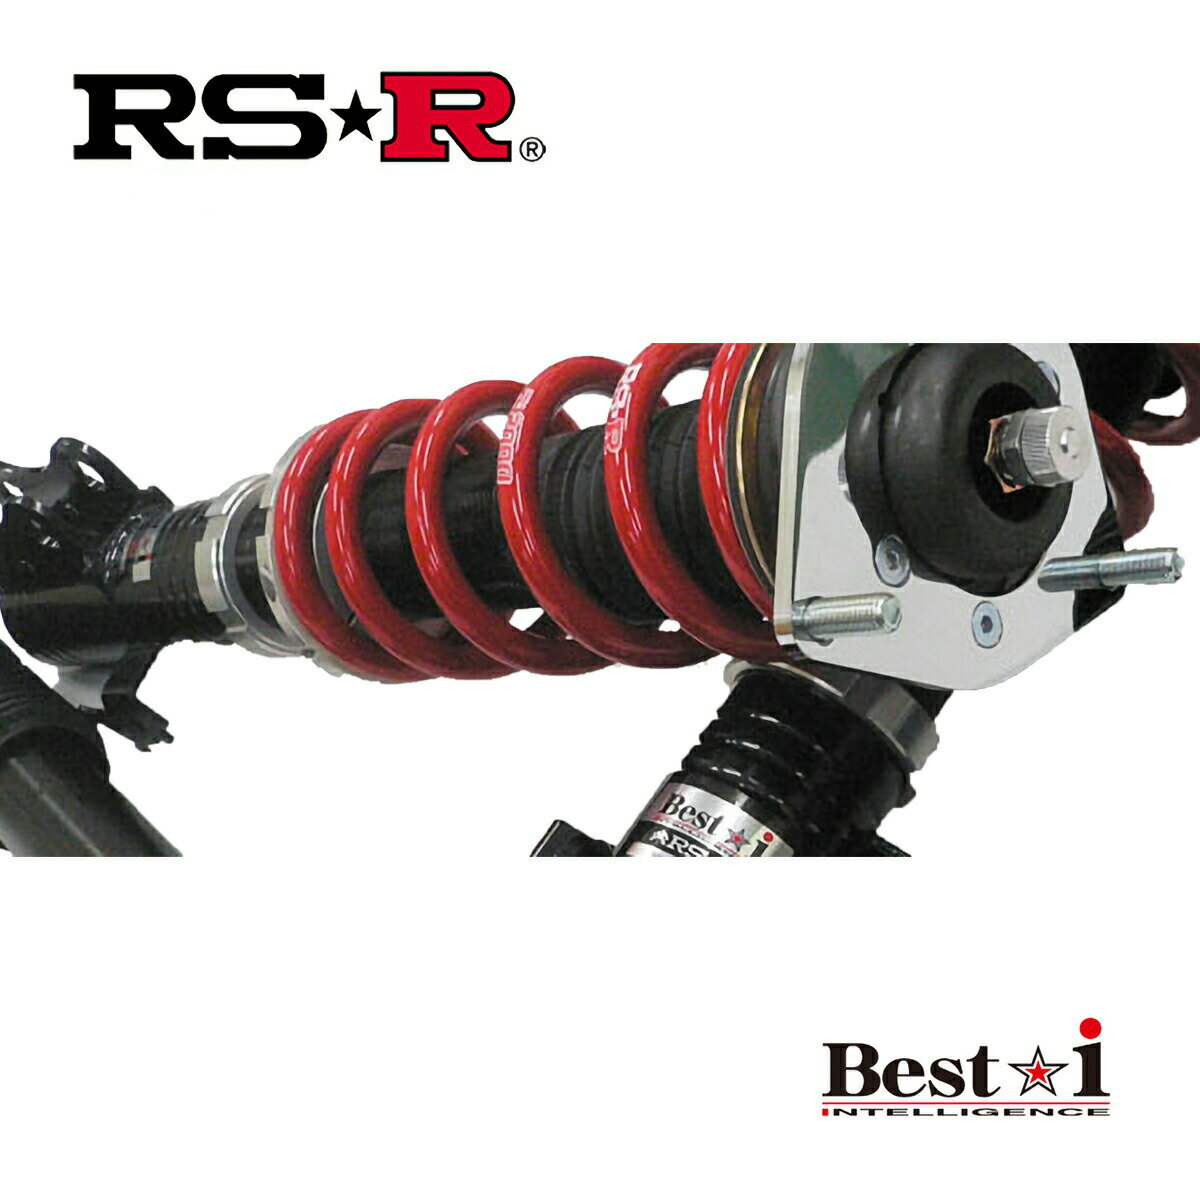 RSR クラウンハイブリッド AZSH20 車高調 リア車高調整: ネジ式 BIT967M RS-R Best-i ベストi